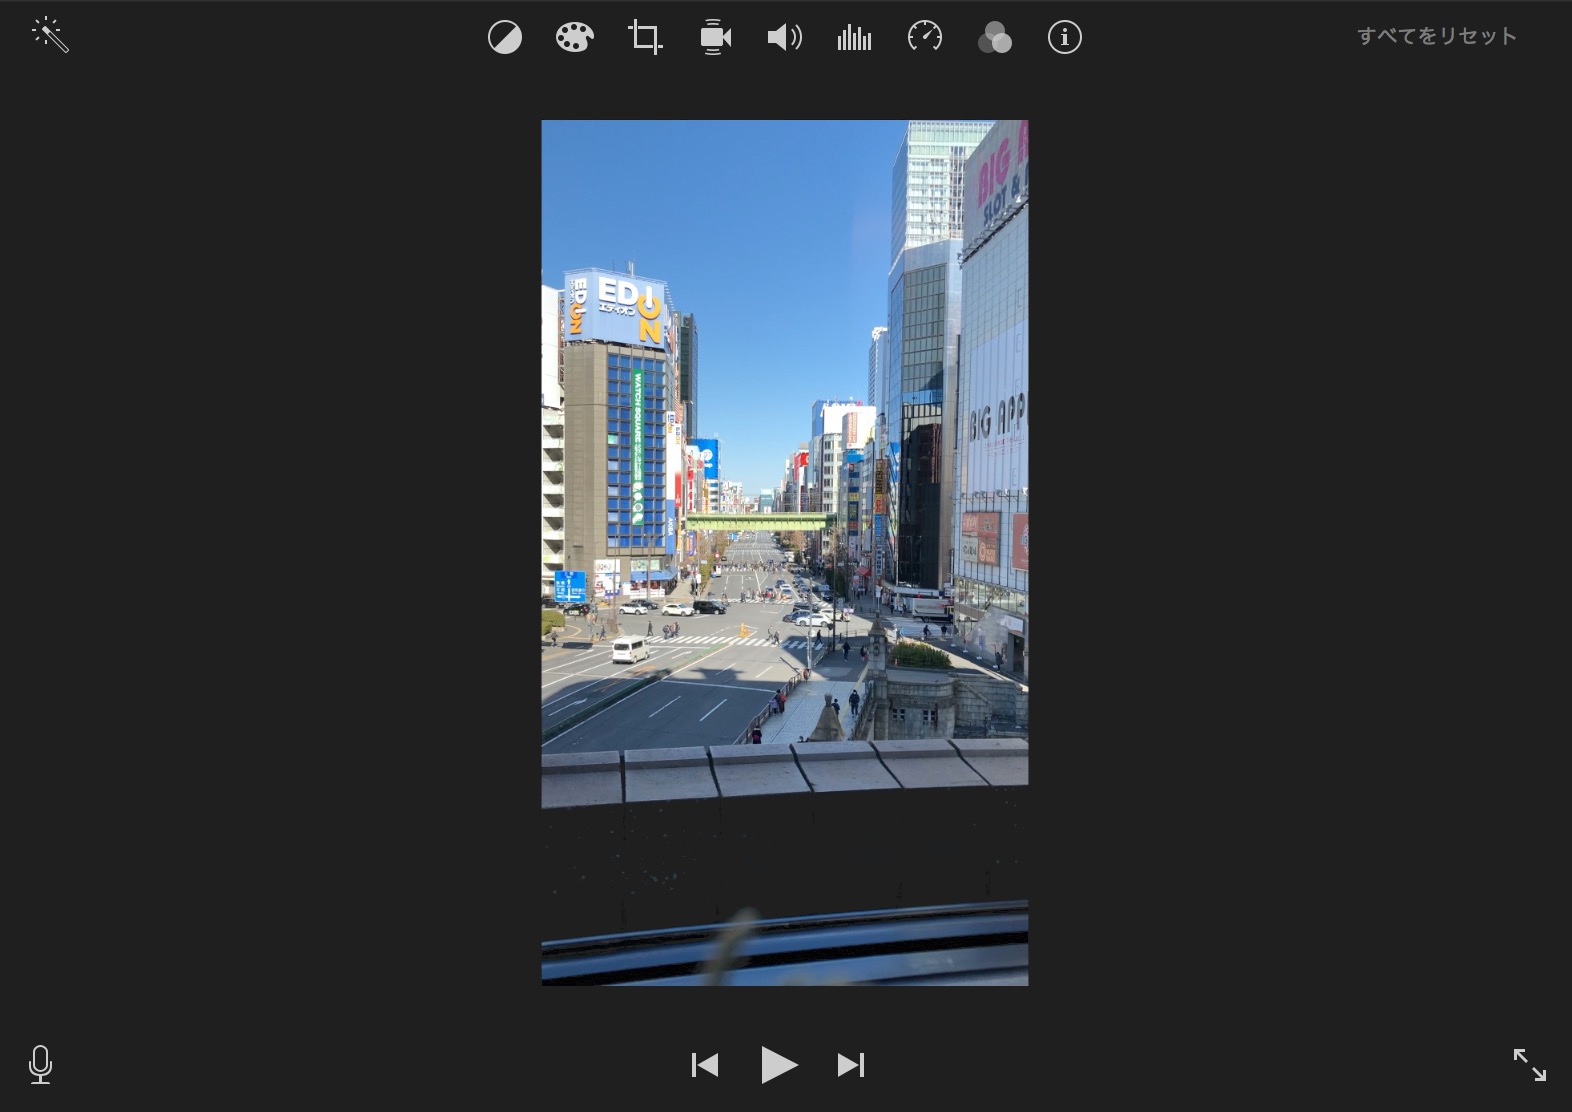 【Mac】YouTubeショート用に縦画面で撮影した動画をMacのiMovieで編集する方法